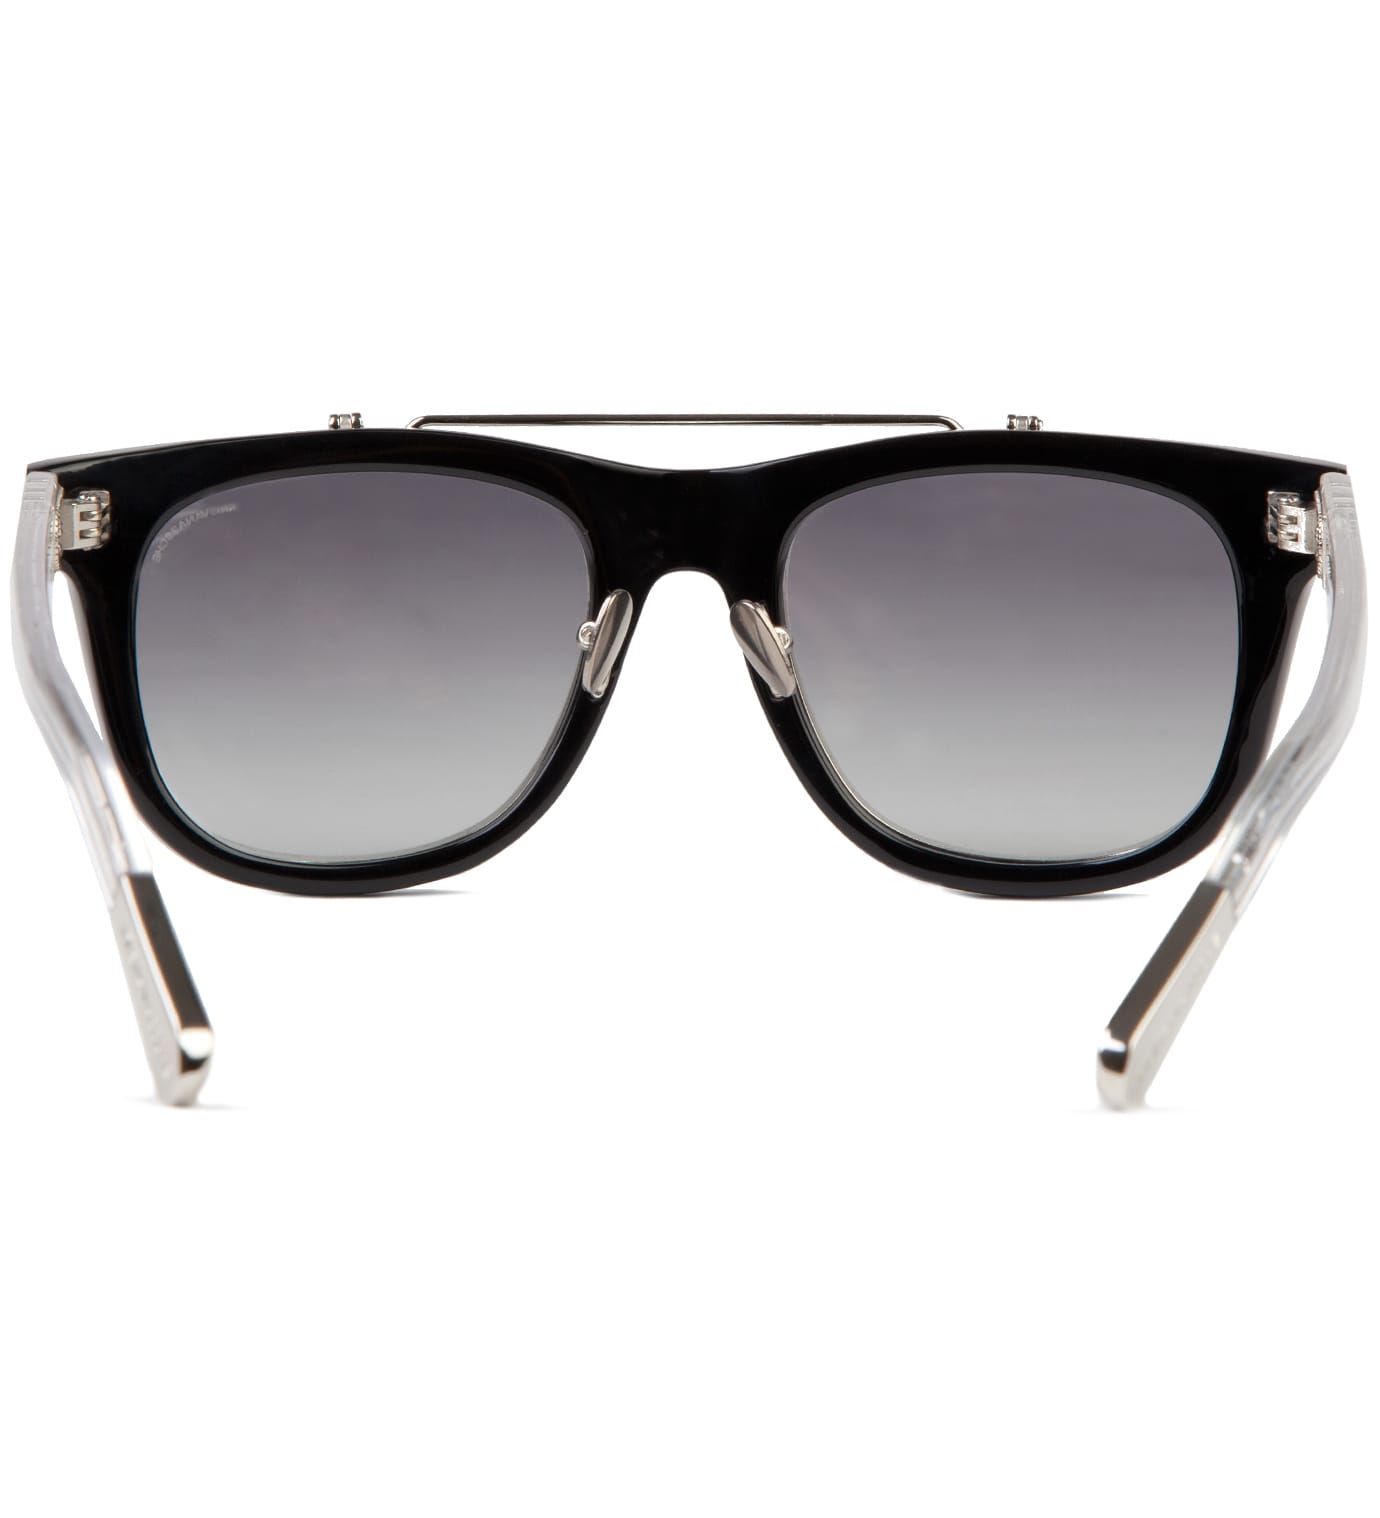 Kris Van Assche Sunglasses Round Shiny Silver and Grey